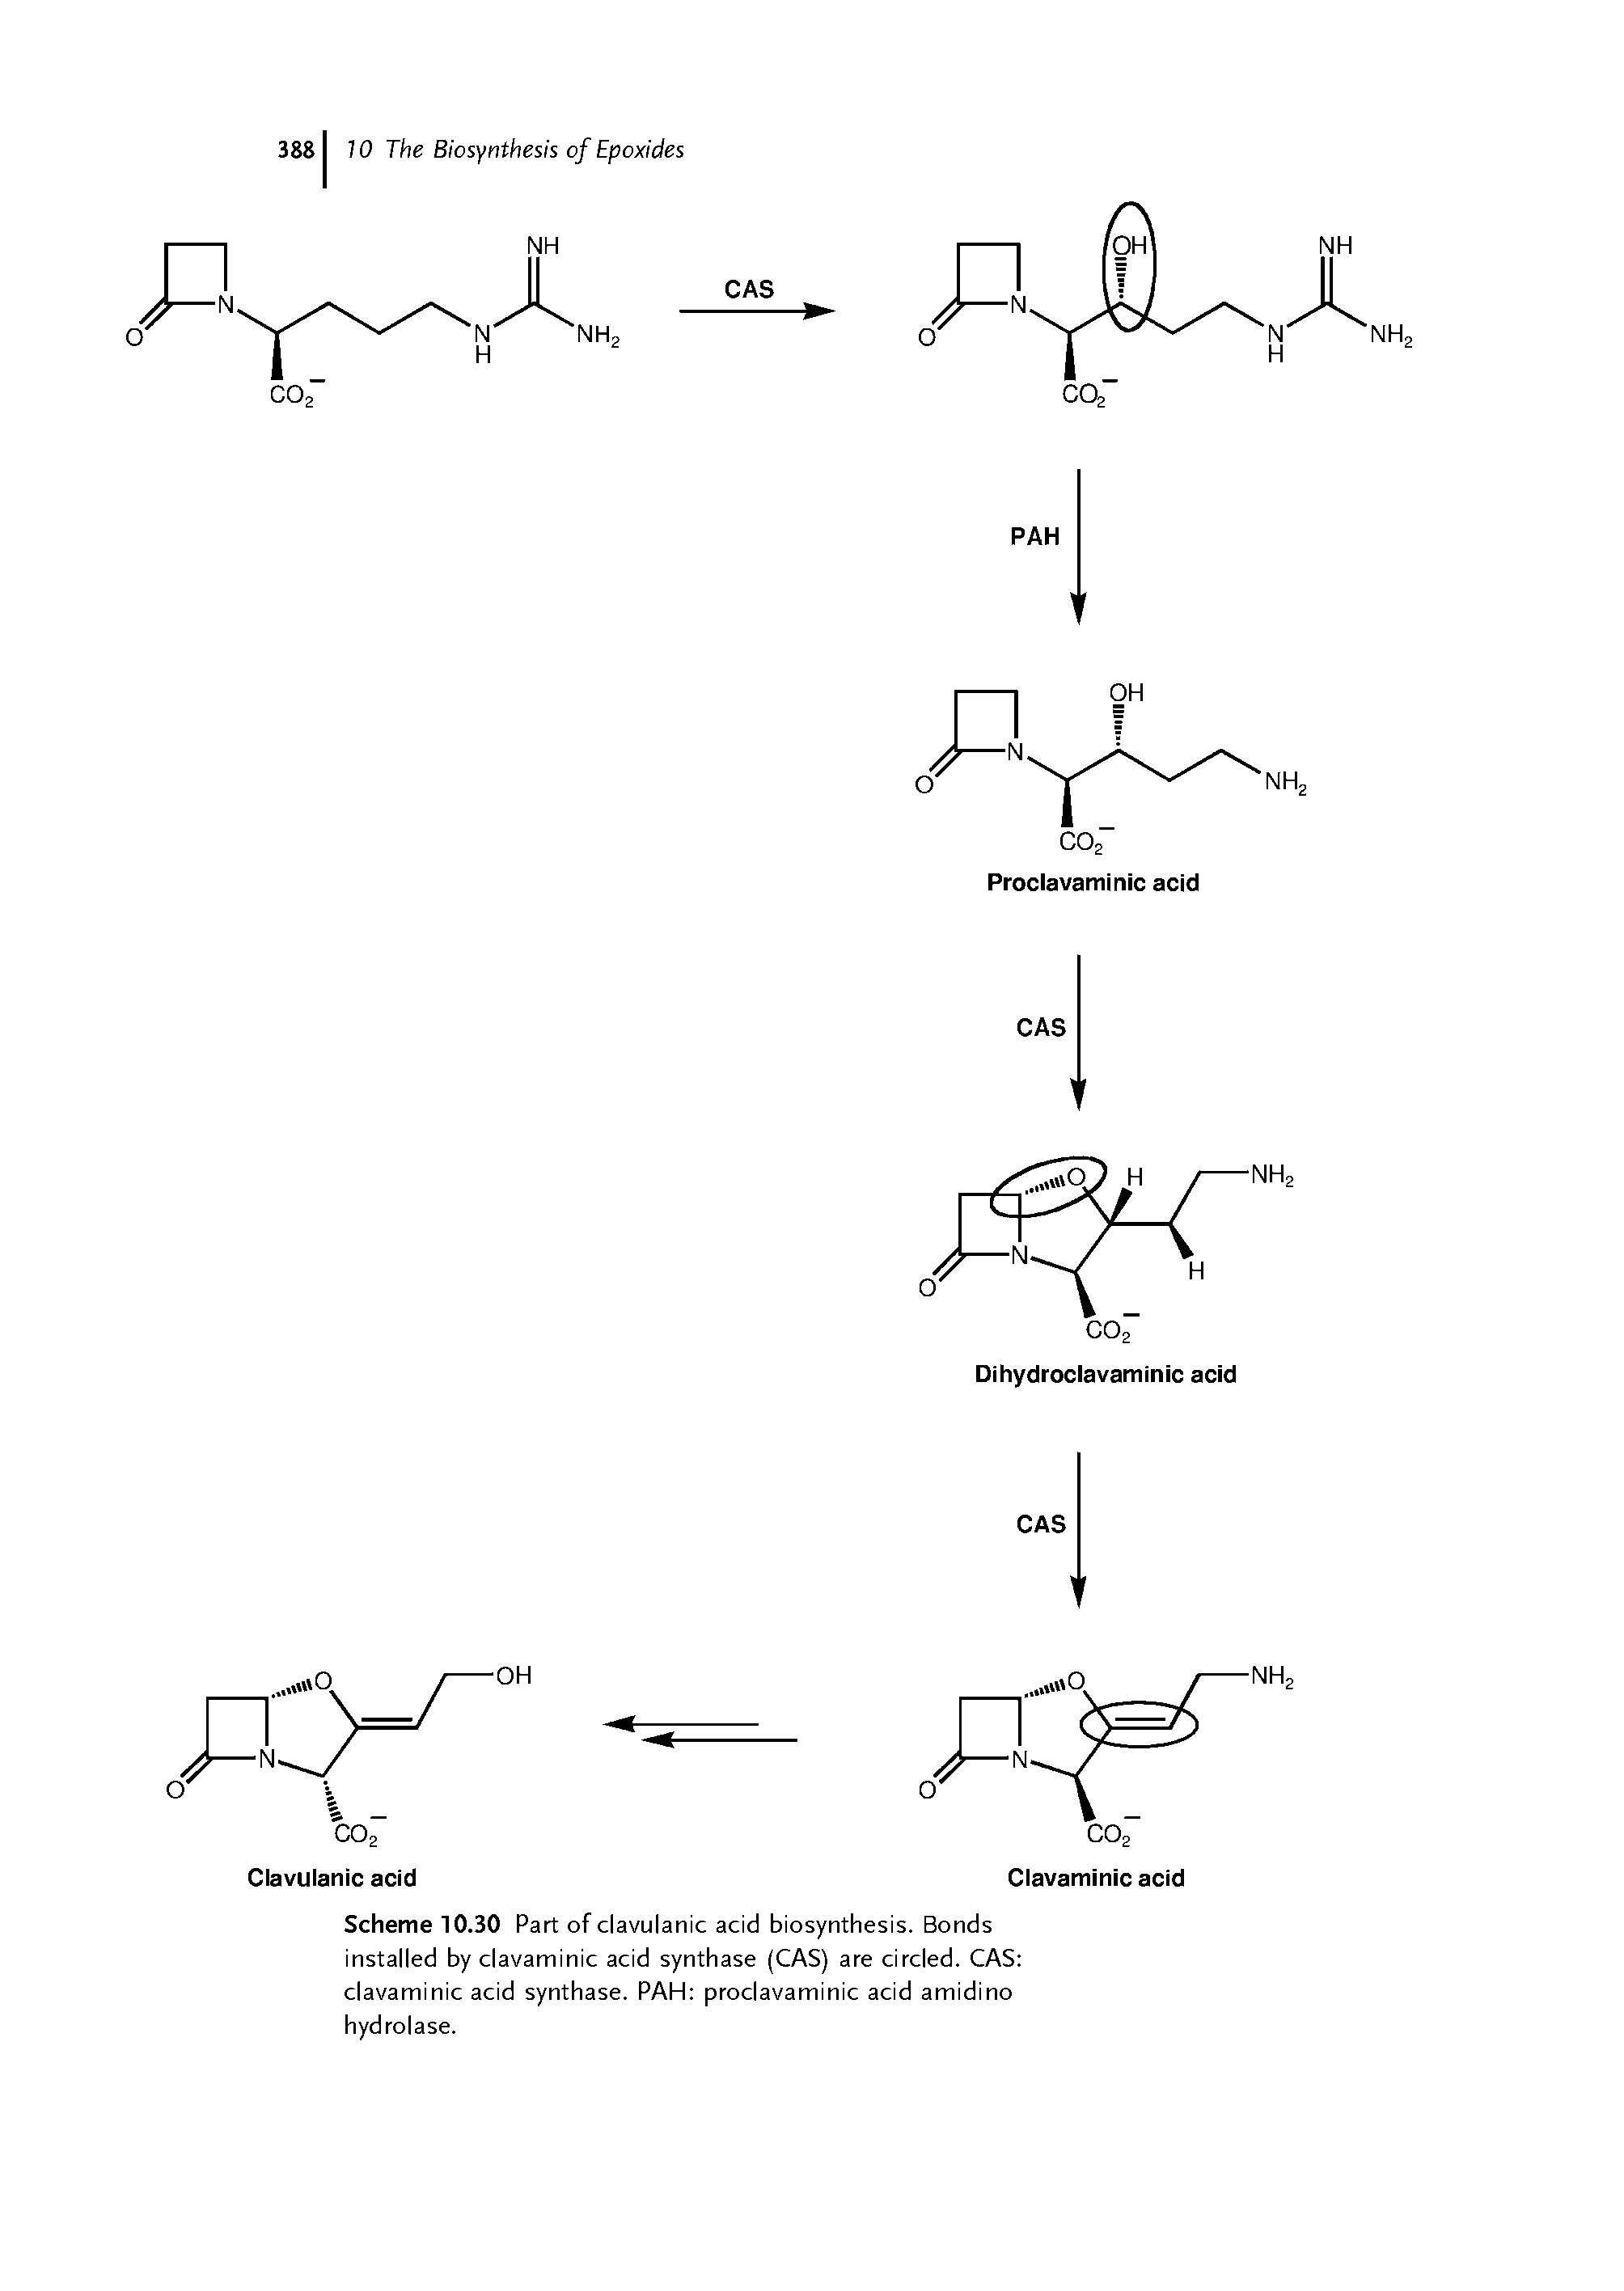 Scheme 10.30 Part of clavulanic acid biosynthesis. Bonds installed byclavaminic acid synthase (CAS) are circled. CAS clavaminic acid synthase. PAH proclavaminic acid amidino hydrolase.